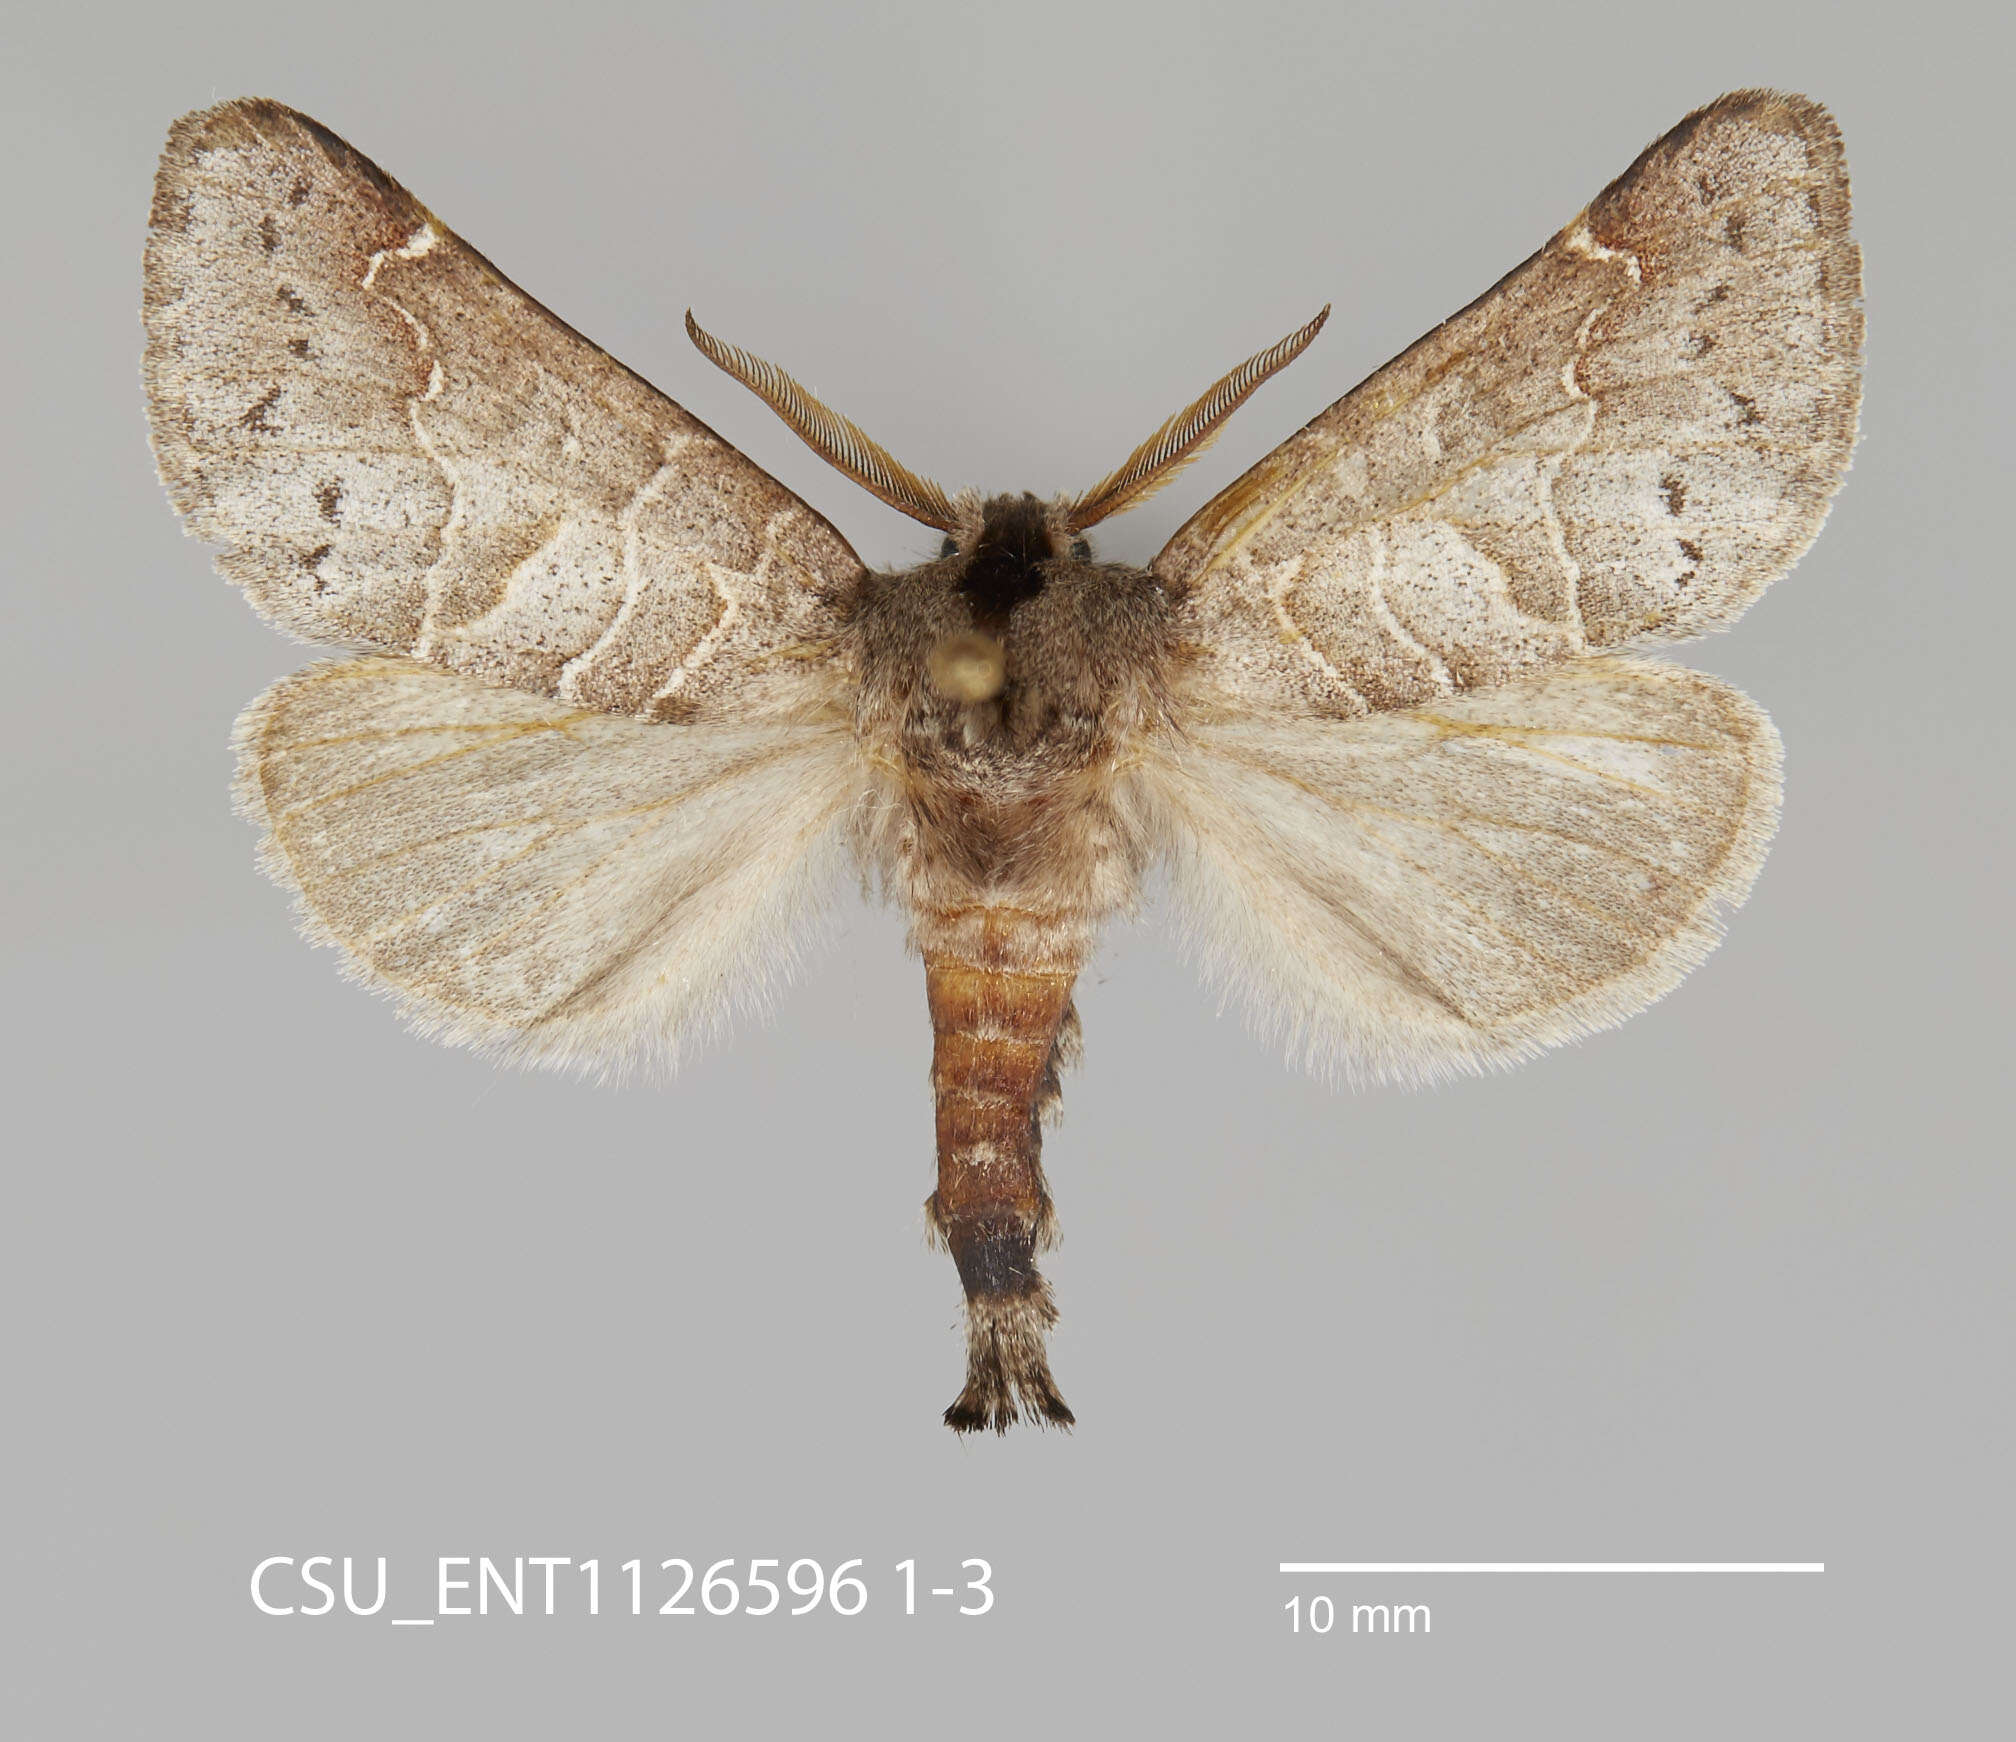 Image of Clostera paraphora Dyar 1921